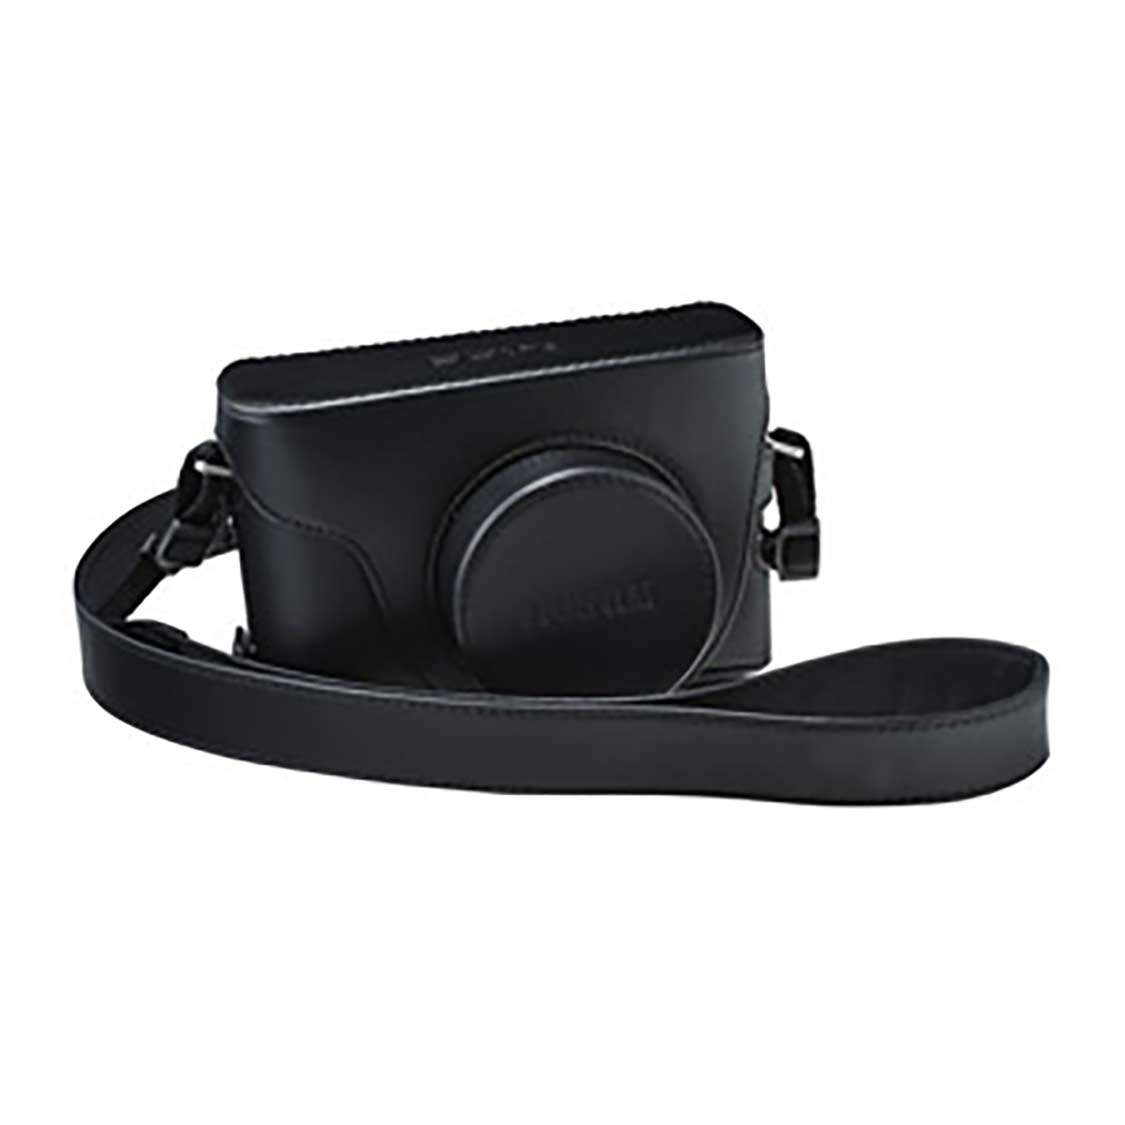 Fujifilm X100s Leather Case (black)